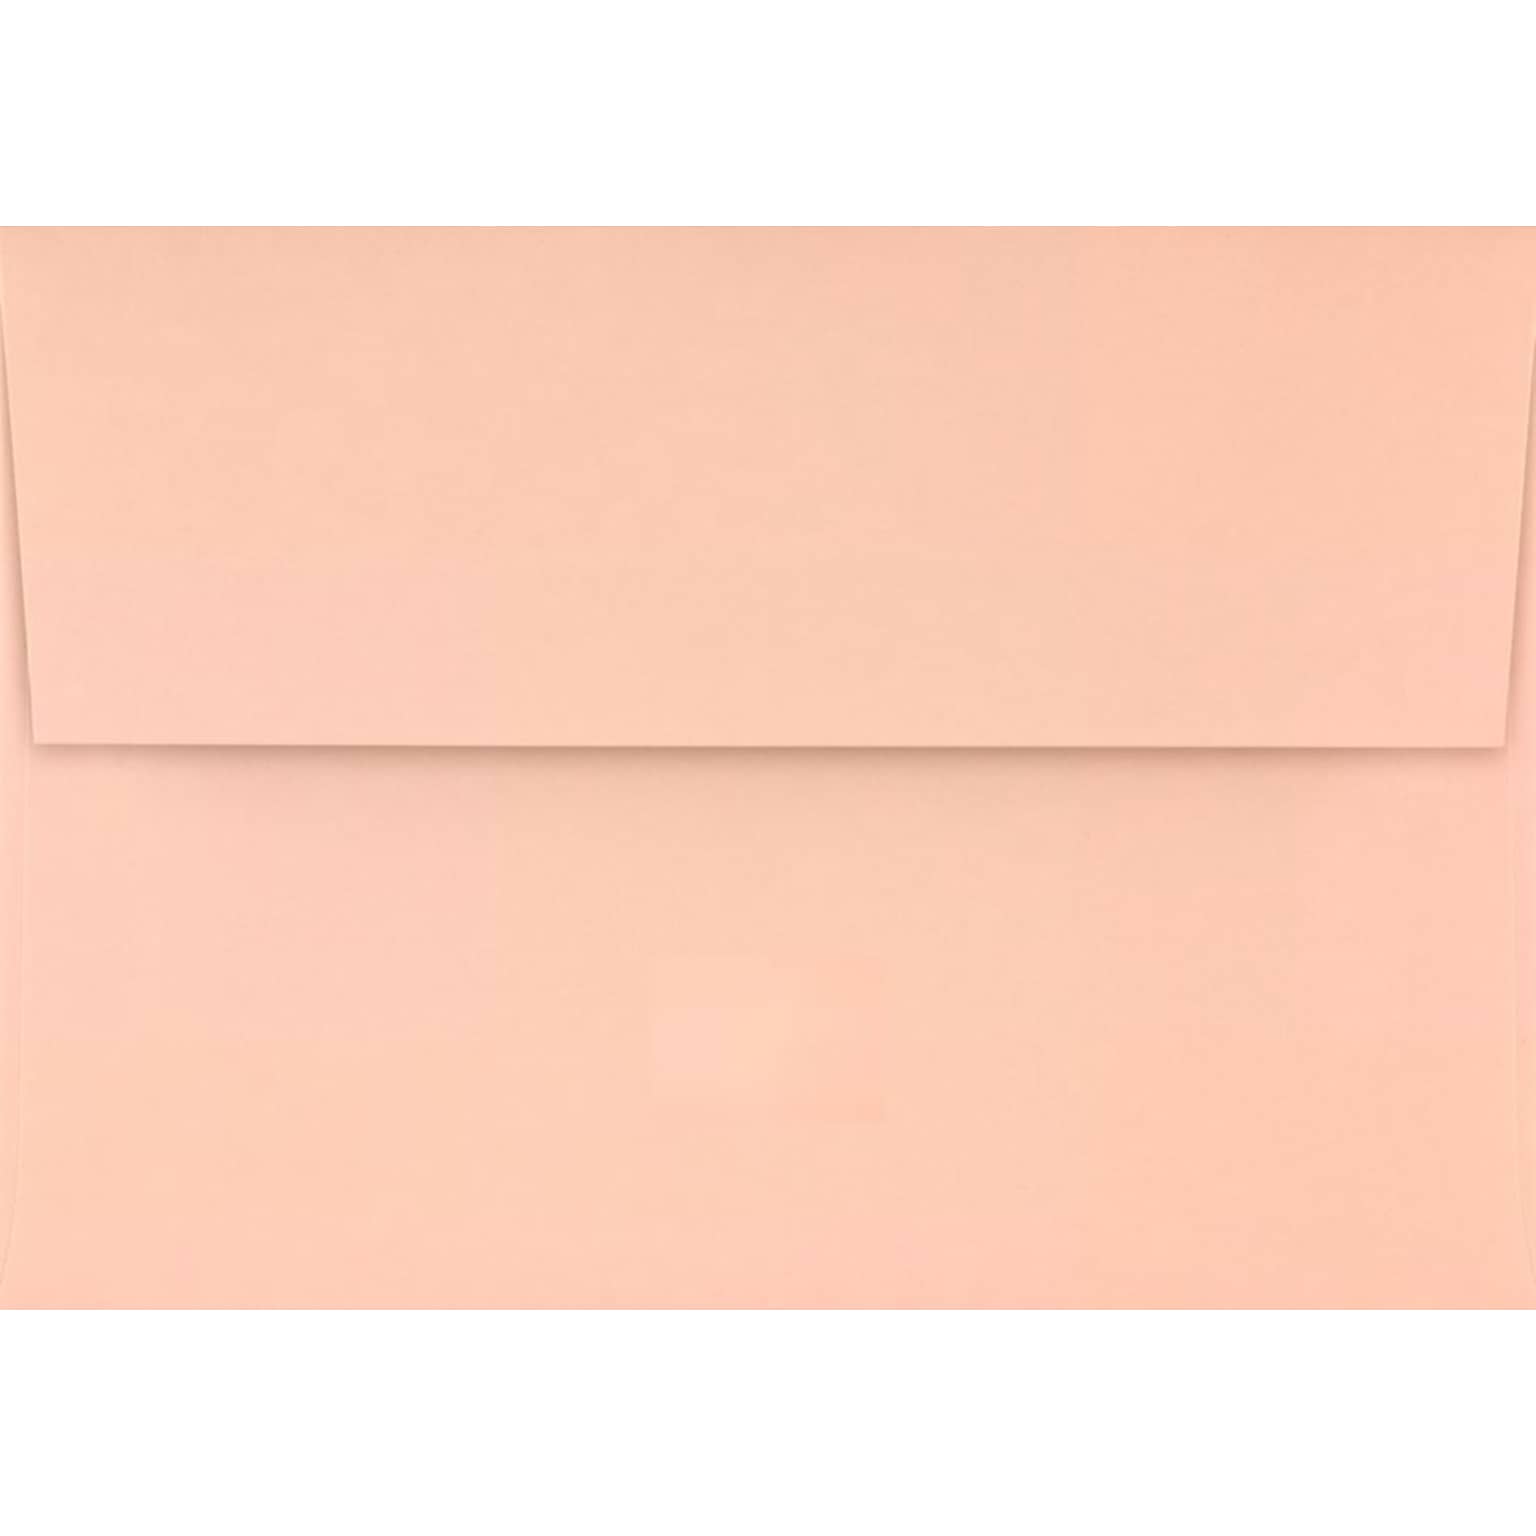 LUX A1 Invitation Envelopes (3 5/8 x 5 1/8) 50/Pack, Blush (LUX-4865-39-50)